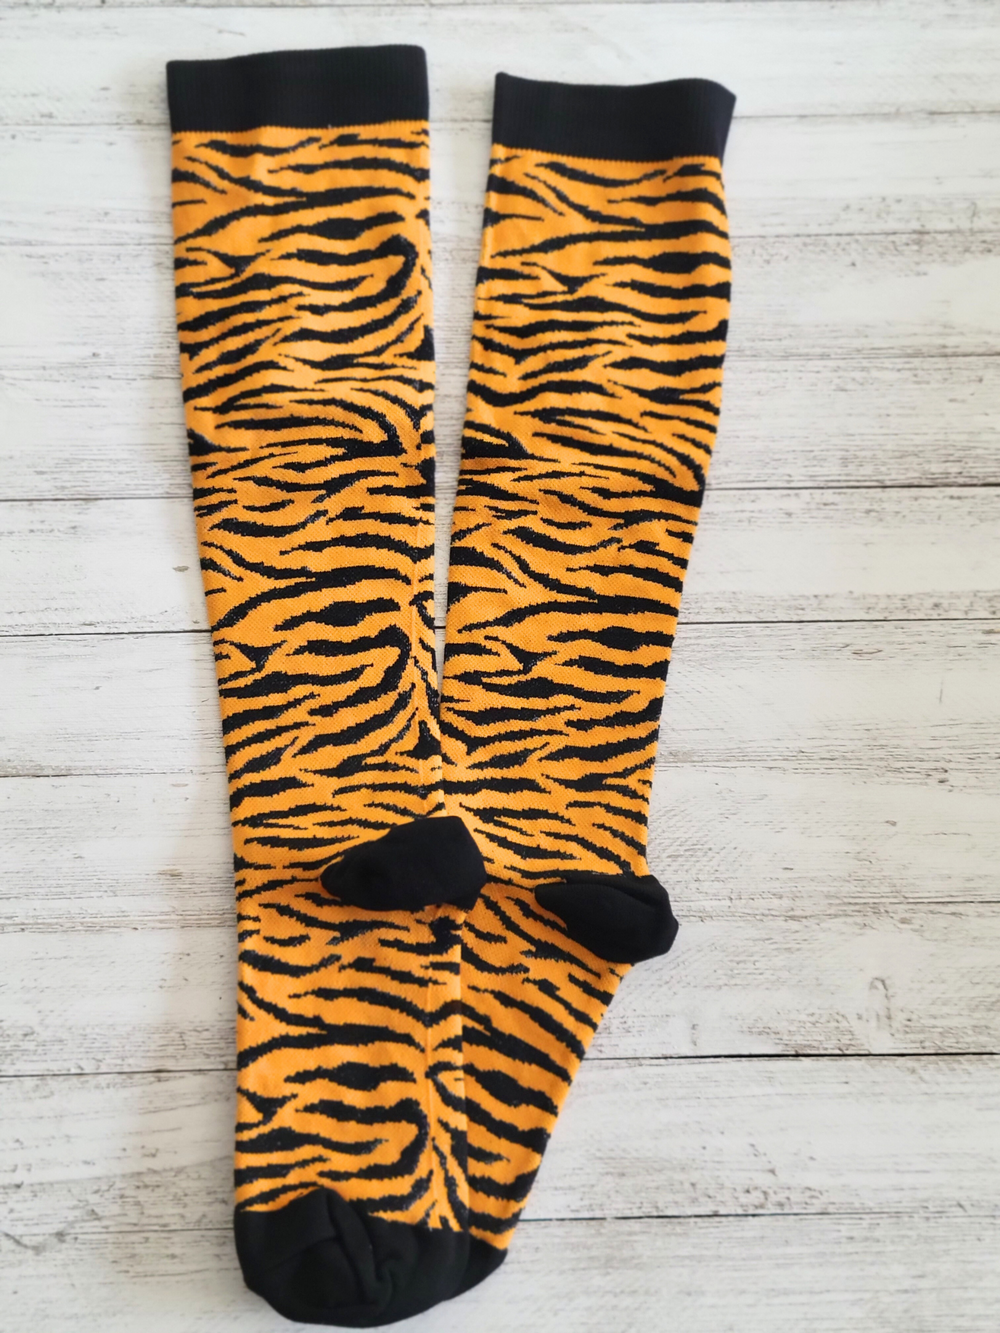 Tiger design socks